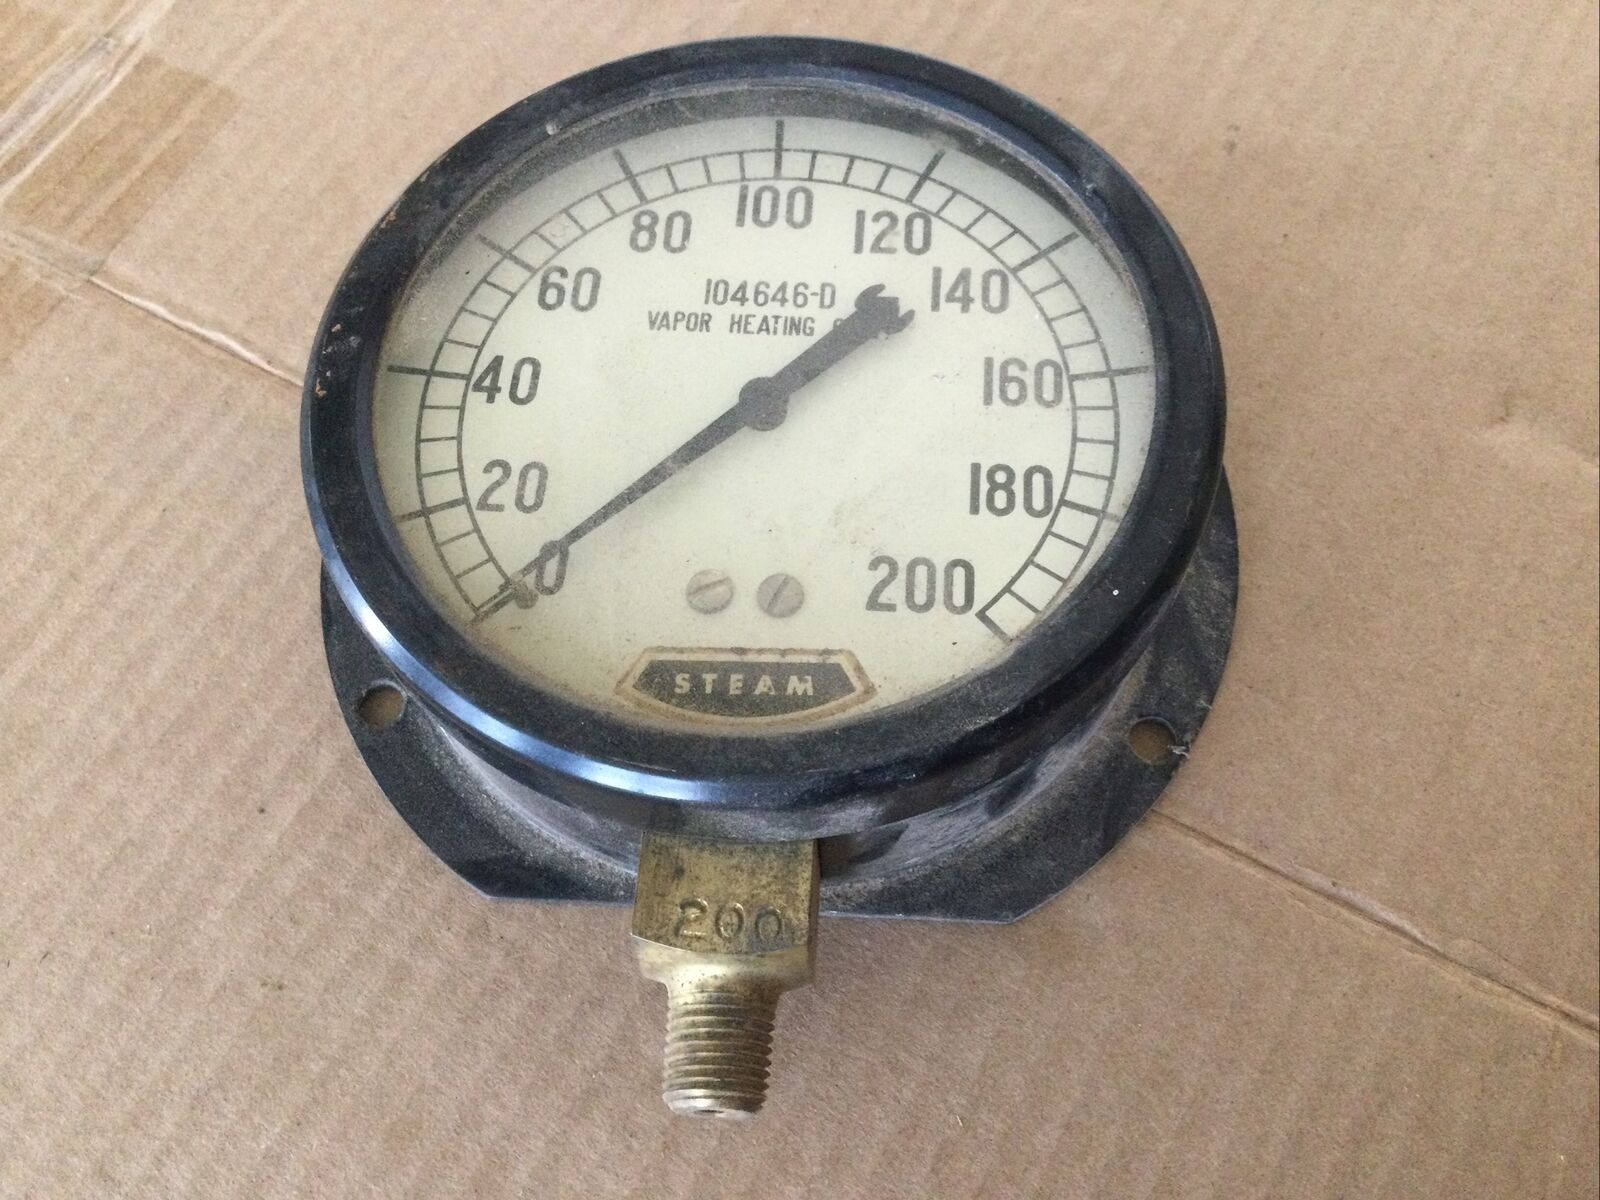 Steam Gadget. Vintage Vapor Heating Corp.